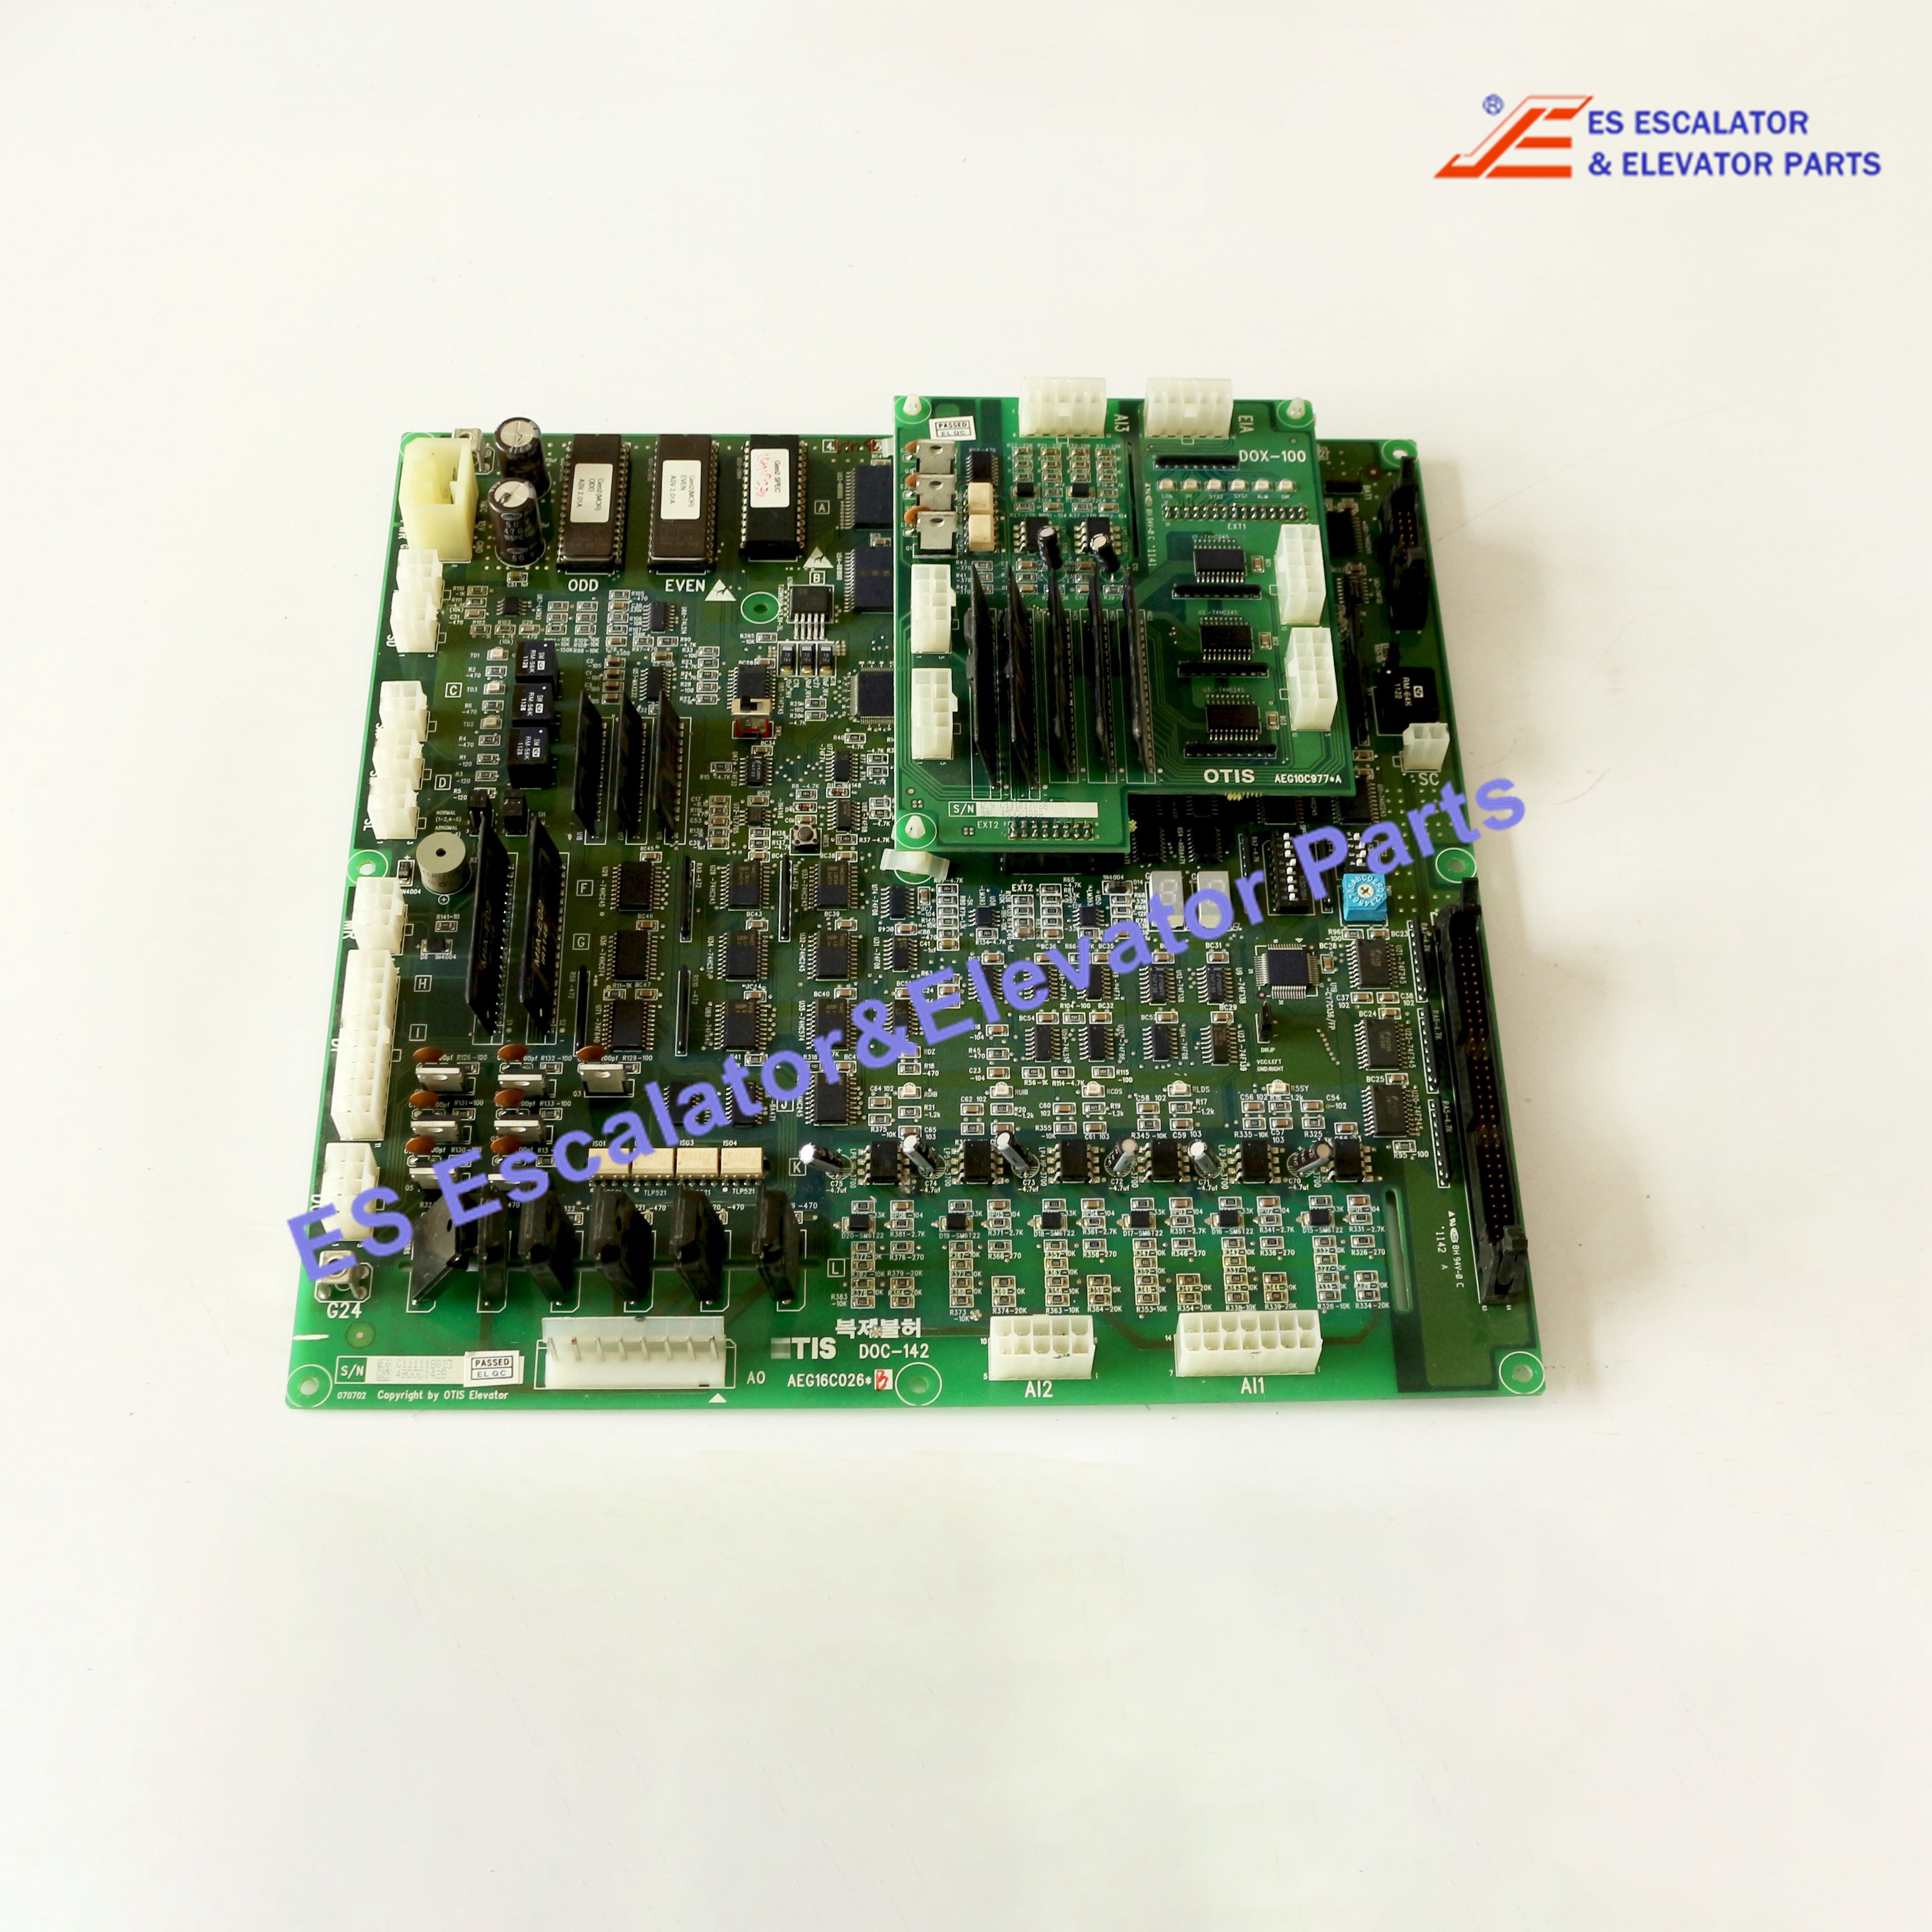 AEG16C026*B Escalator PCB Board DOC-142 Mother Board Use For Lg/Sigma